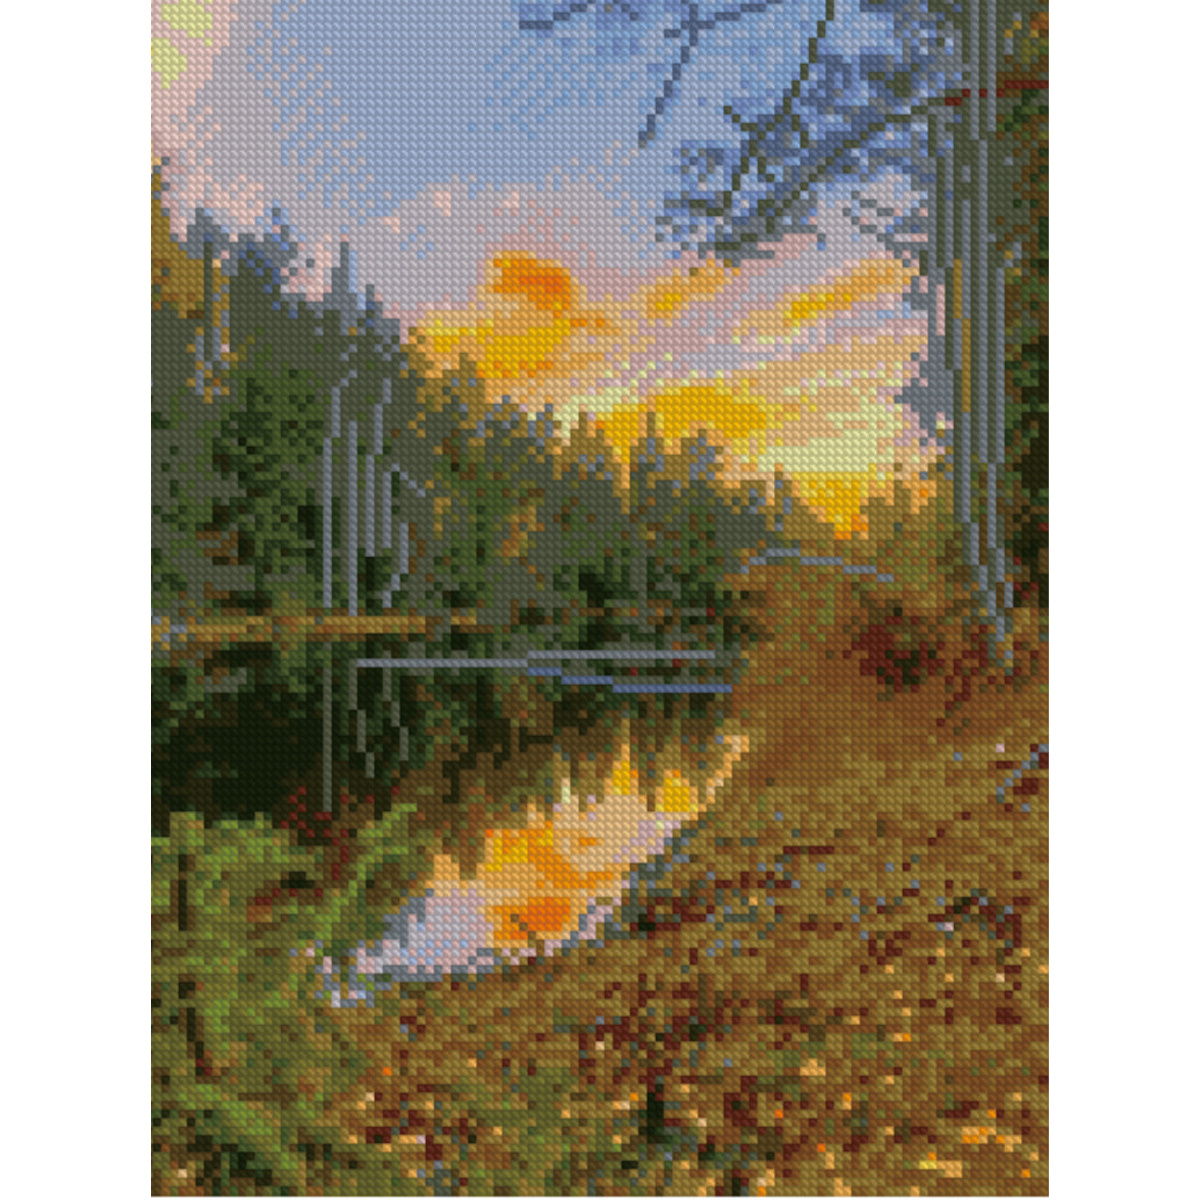 Diamond mosaic Premium HX142 "Golden Sunset", size 30x40 cm